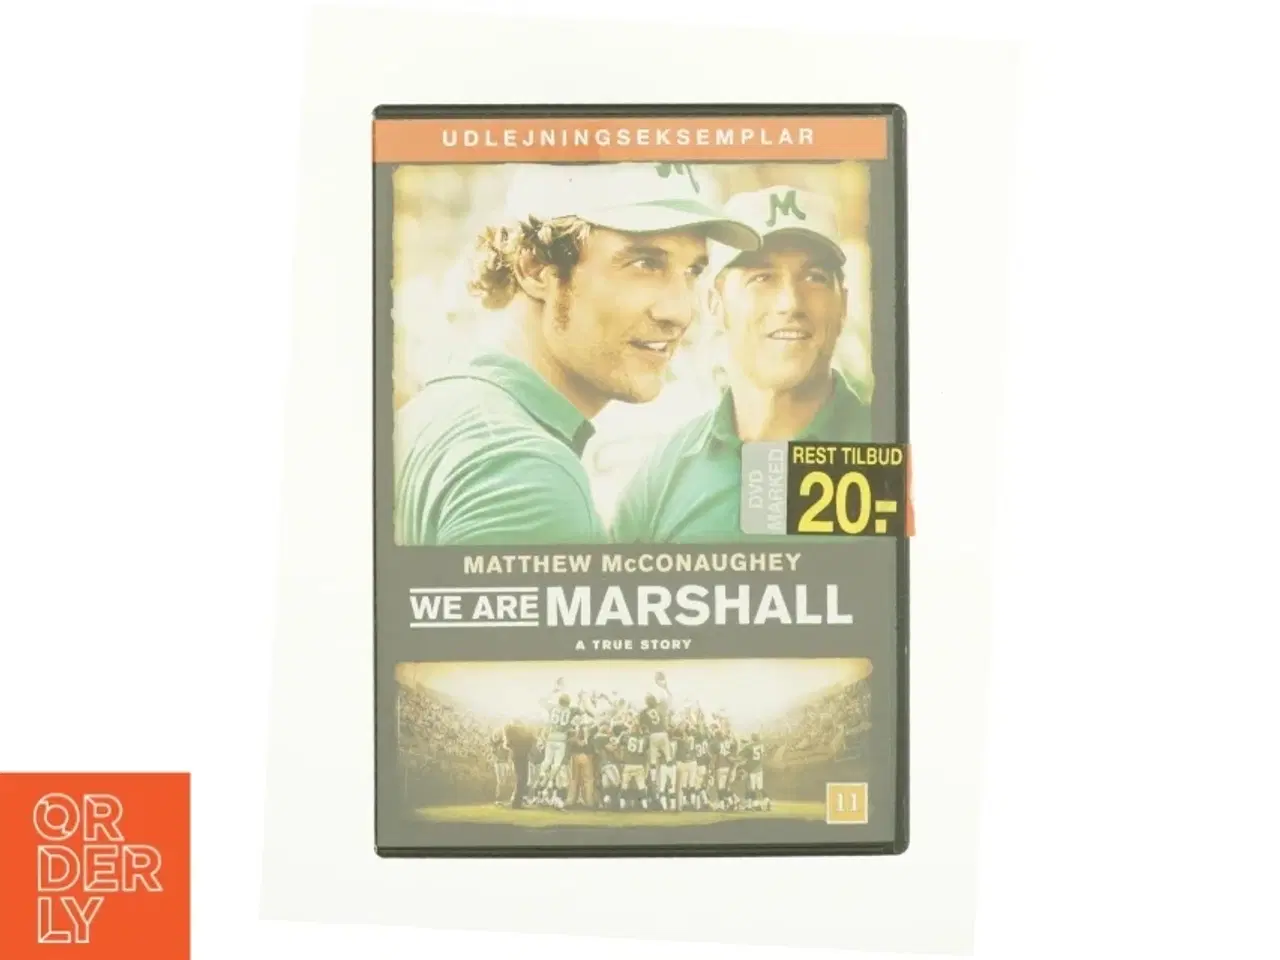 Billede 1 - We are Marshall fra DVD